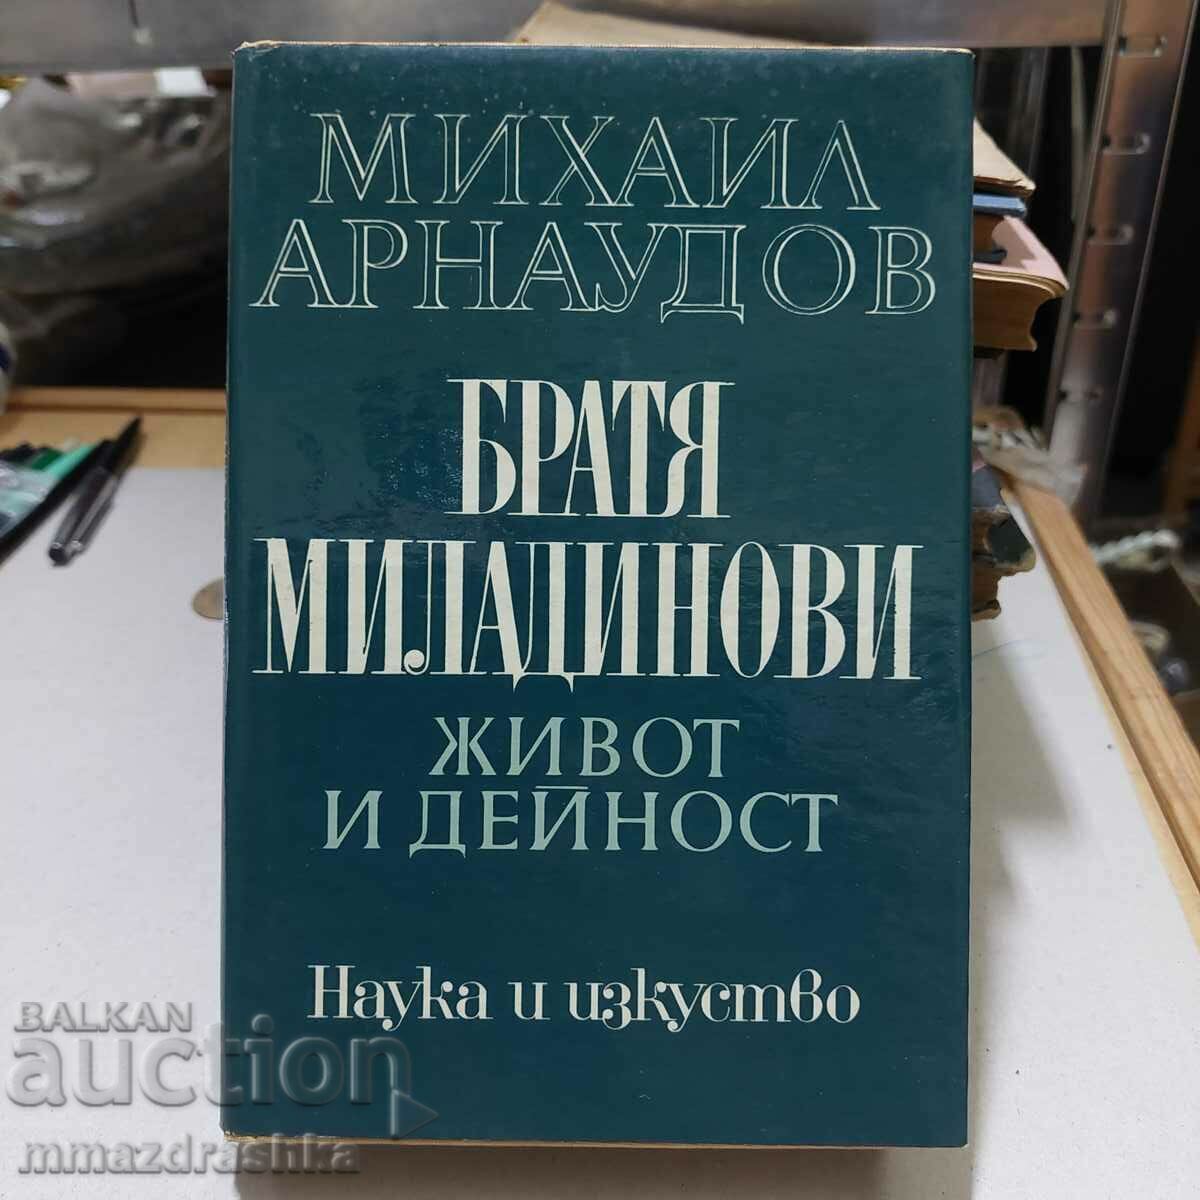 Miladinovi brothers. Life and activity, Mikhail Arnaudov